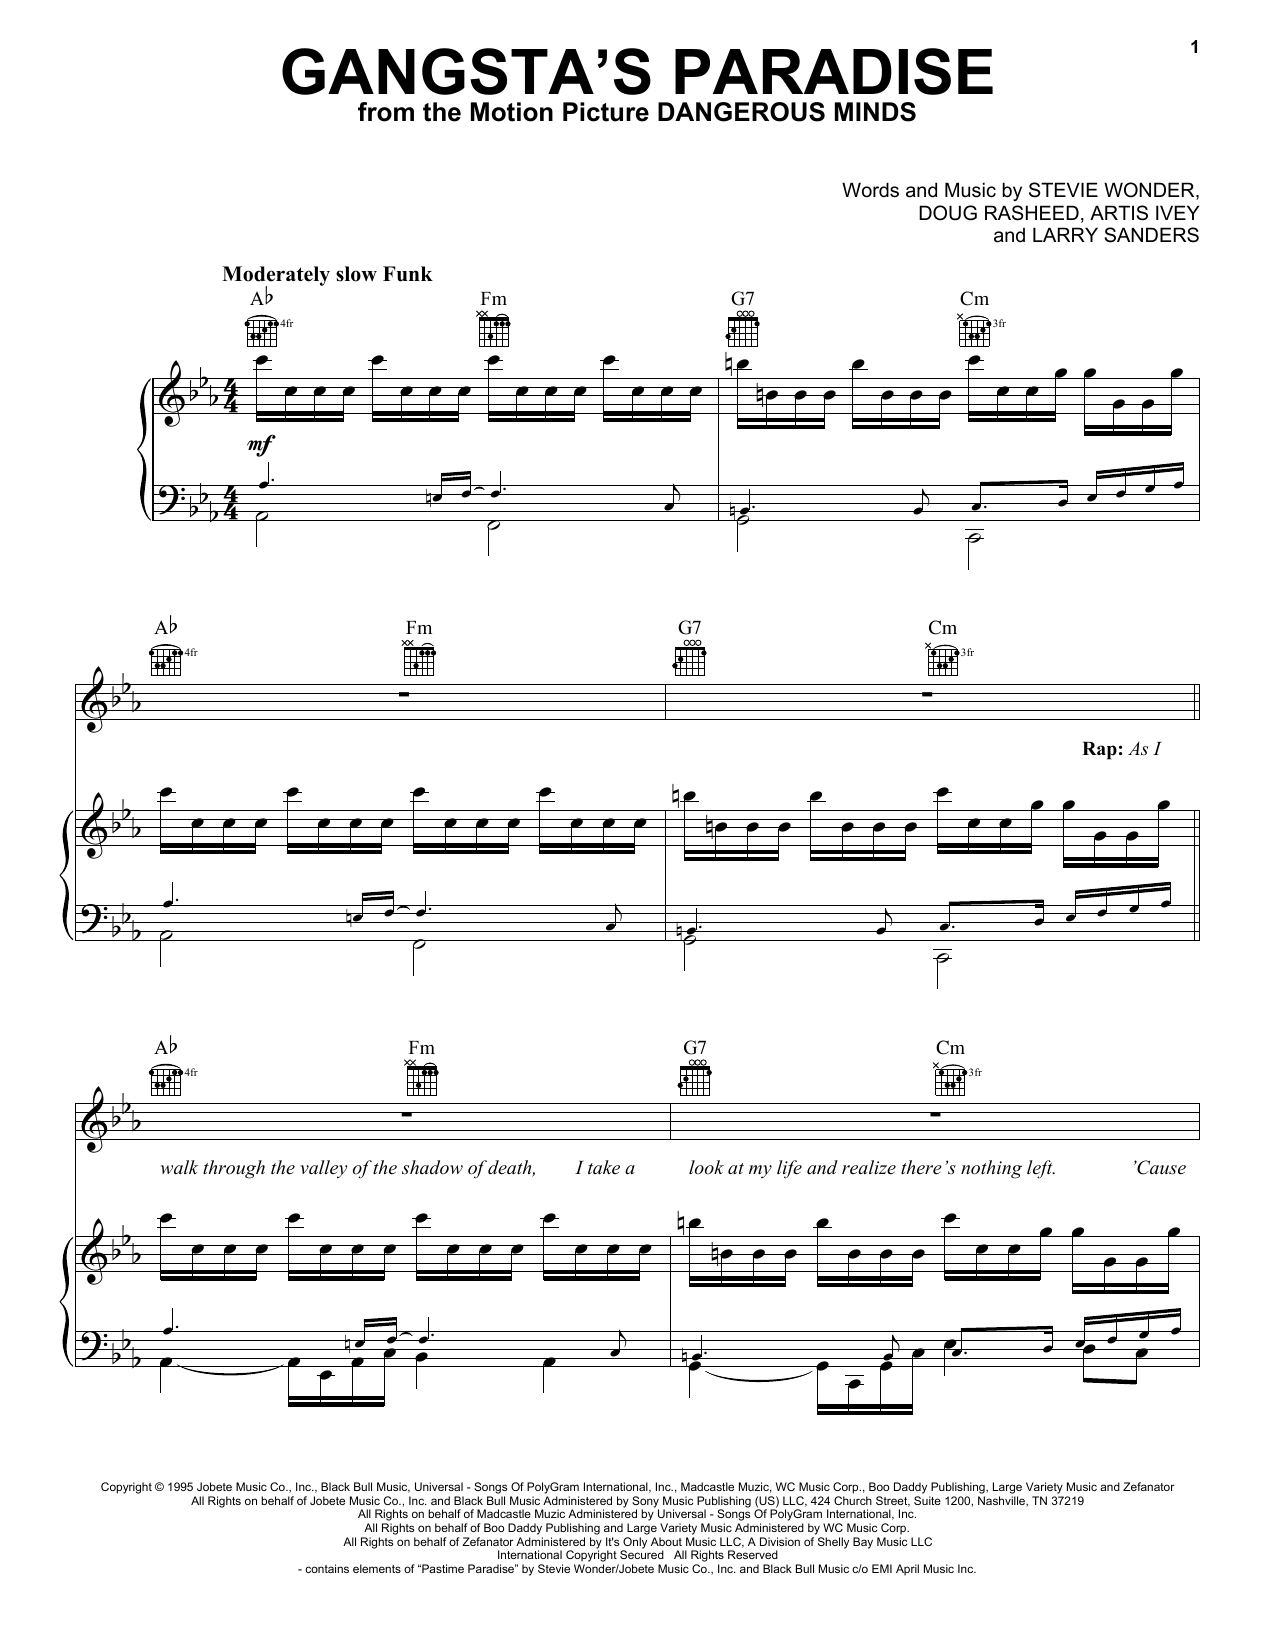 Coolio Gangsta's Paradise (feat. L.V.) sheet music notes printable PDF score